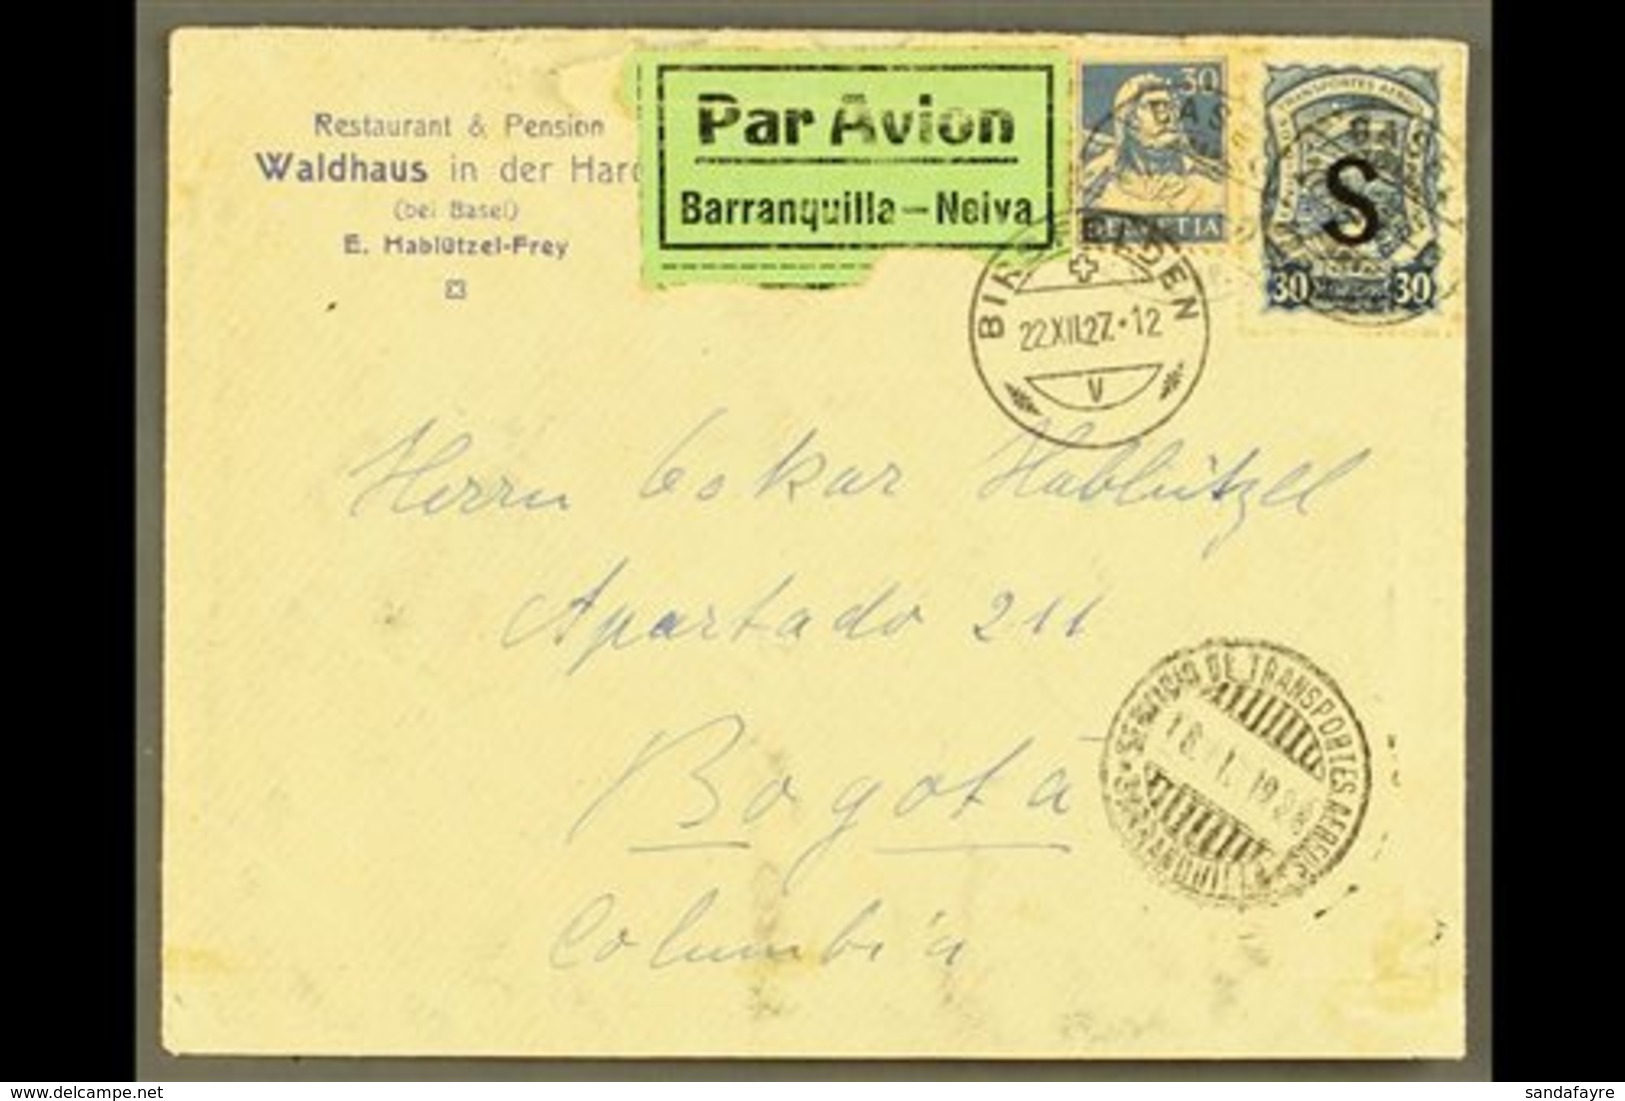 SCADTA  1927 (22 Dec) Cover From Switzerland Addressed To Bogota, Bearing Switzerland 30c And SCADTA 1923 30c With "S" C - Colombie